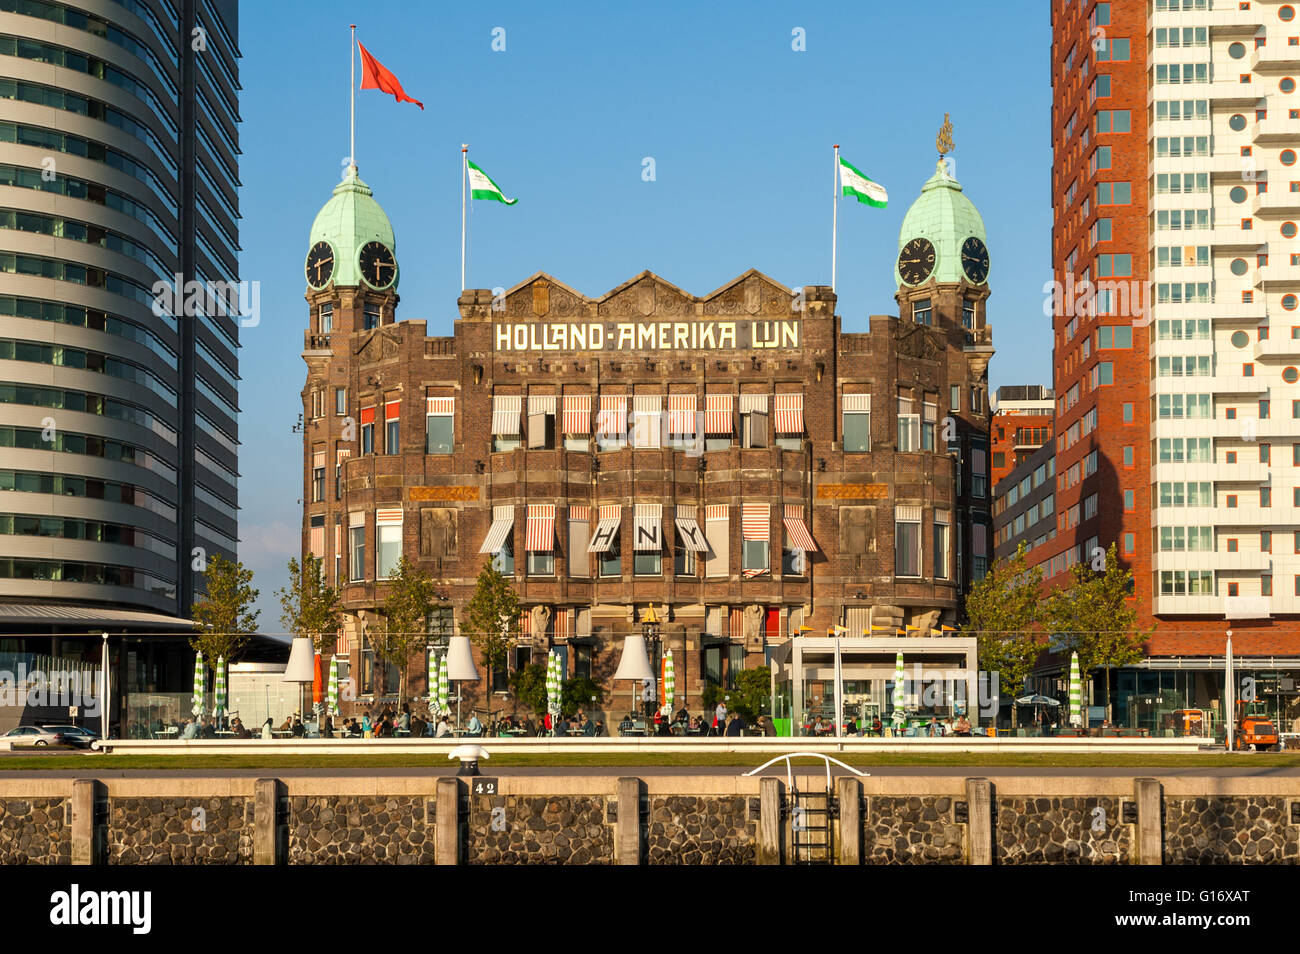 Hotel New York in former Holland America Line Office building on Kop van Zuid in Rotterdam, Netherlands. Stock Photo